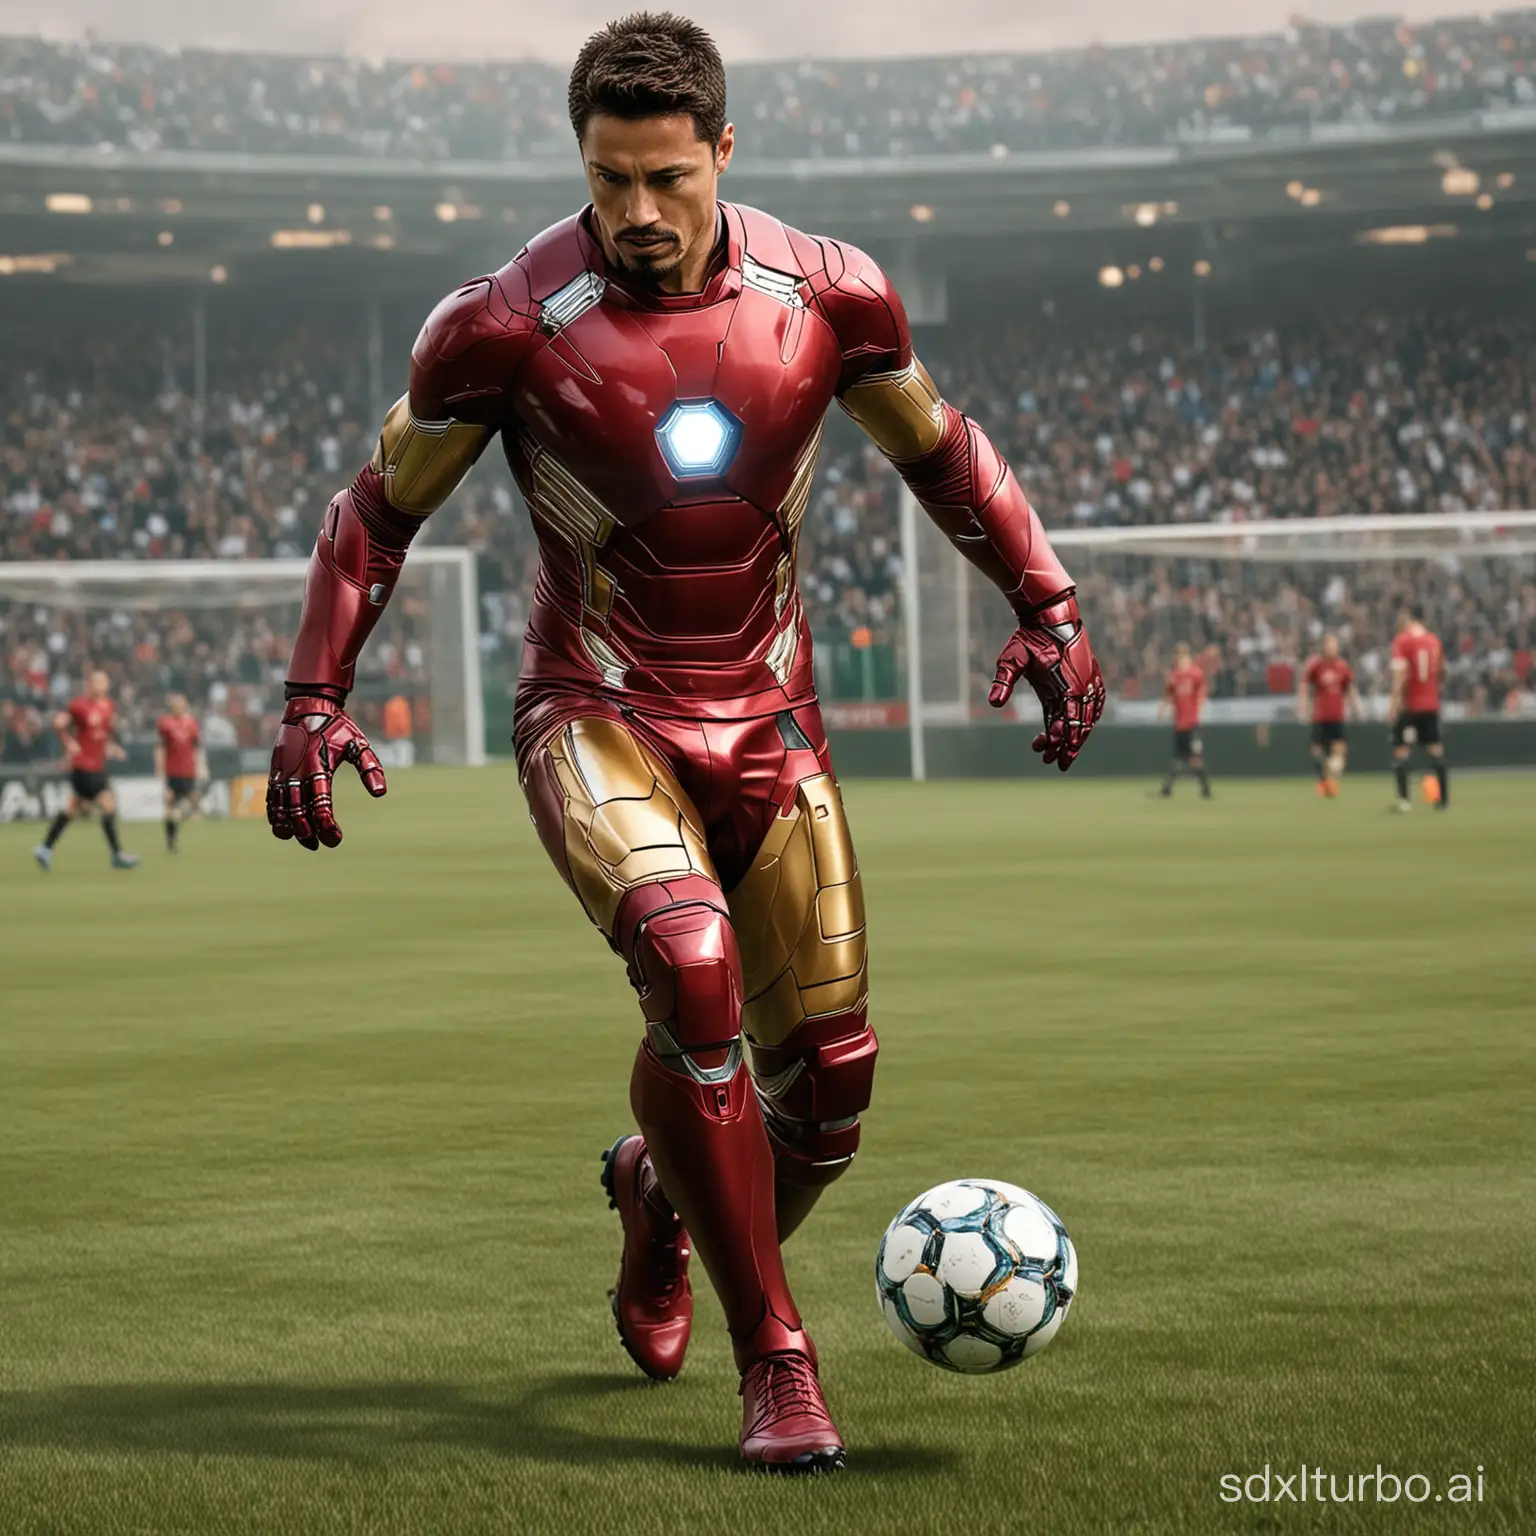 Iron Man playing soccer, feinting Cristiano Ronaldo realistic image